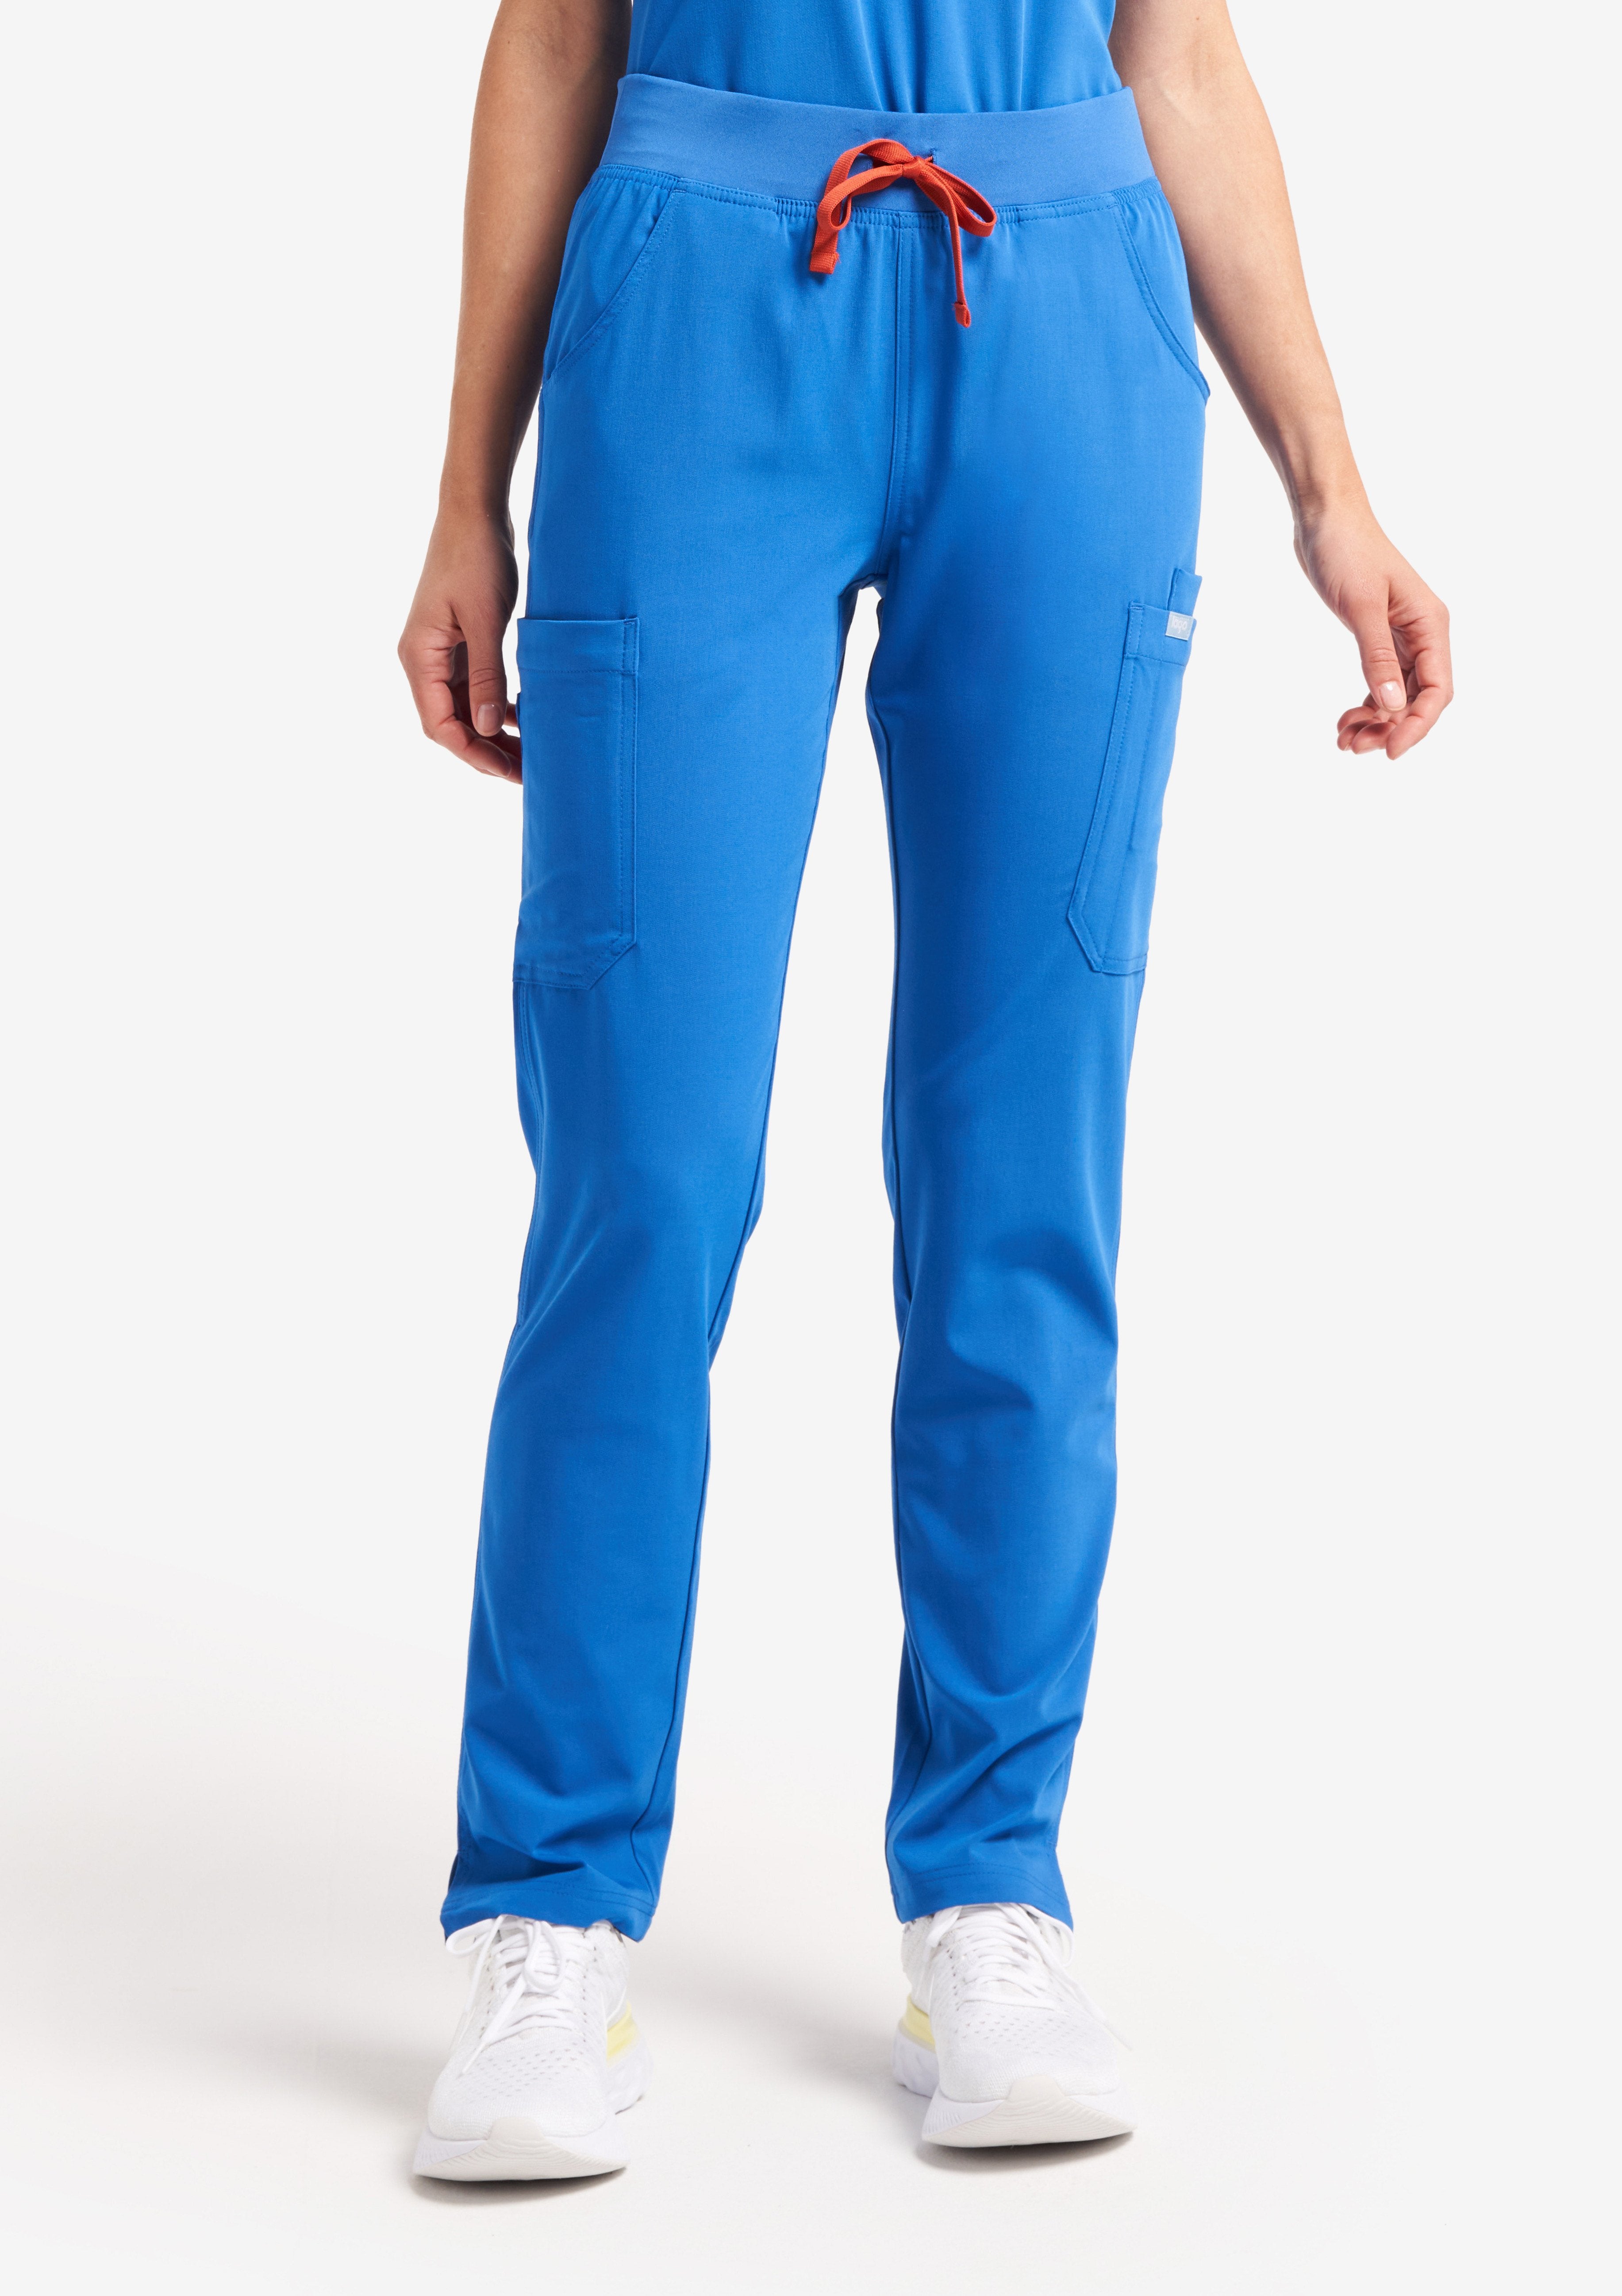 Royal Blue Yoga Waistband Women's Jogger Pants 8520 - The Nursing Store Inc.